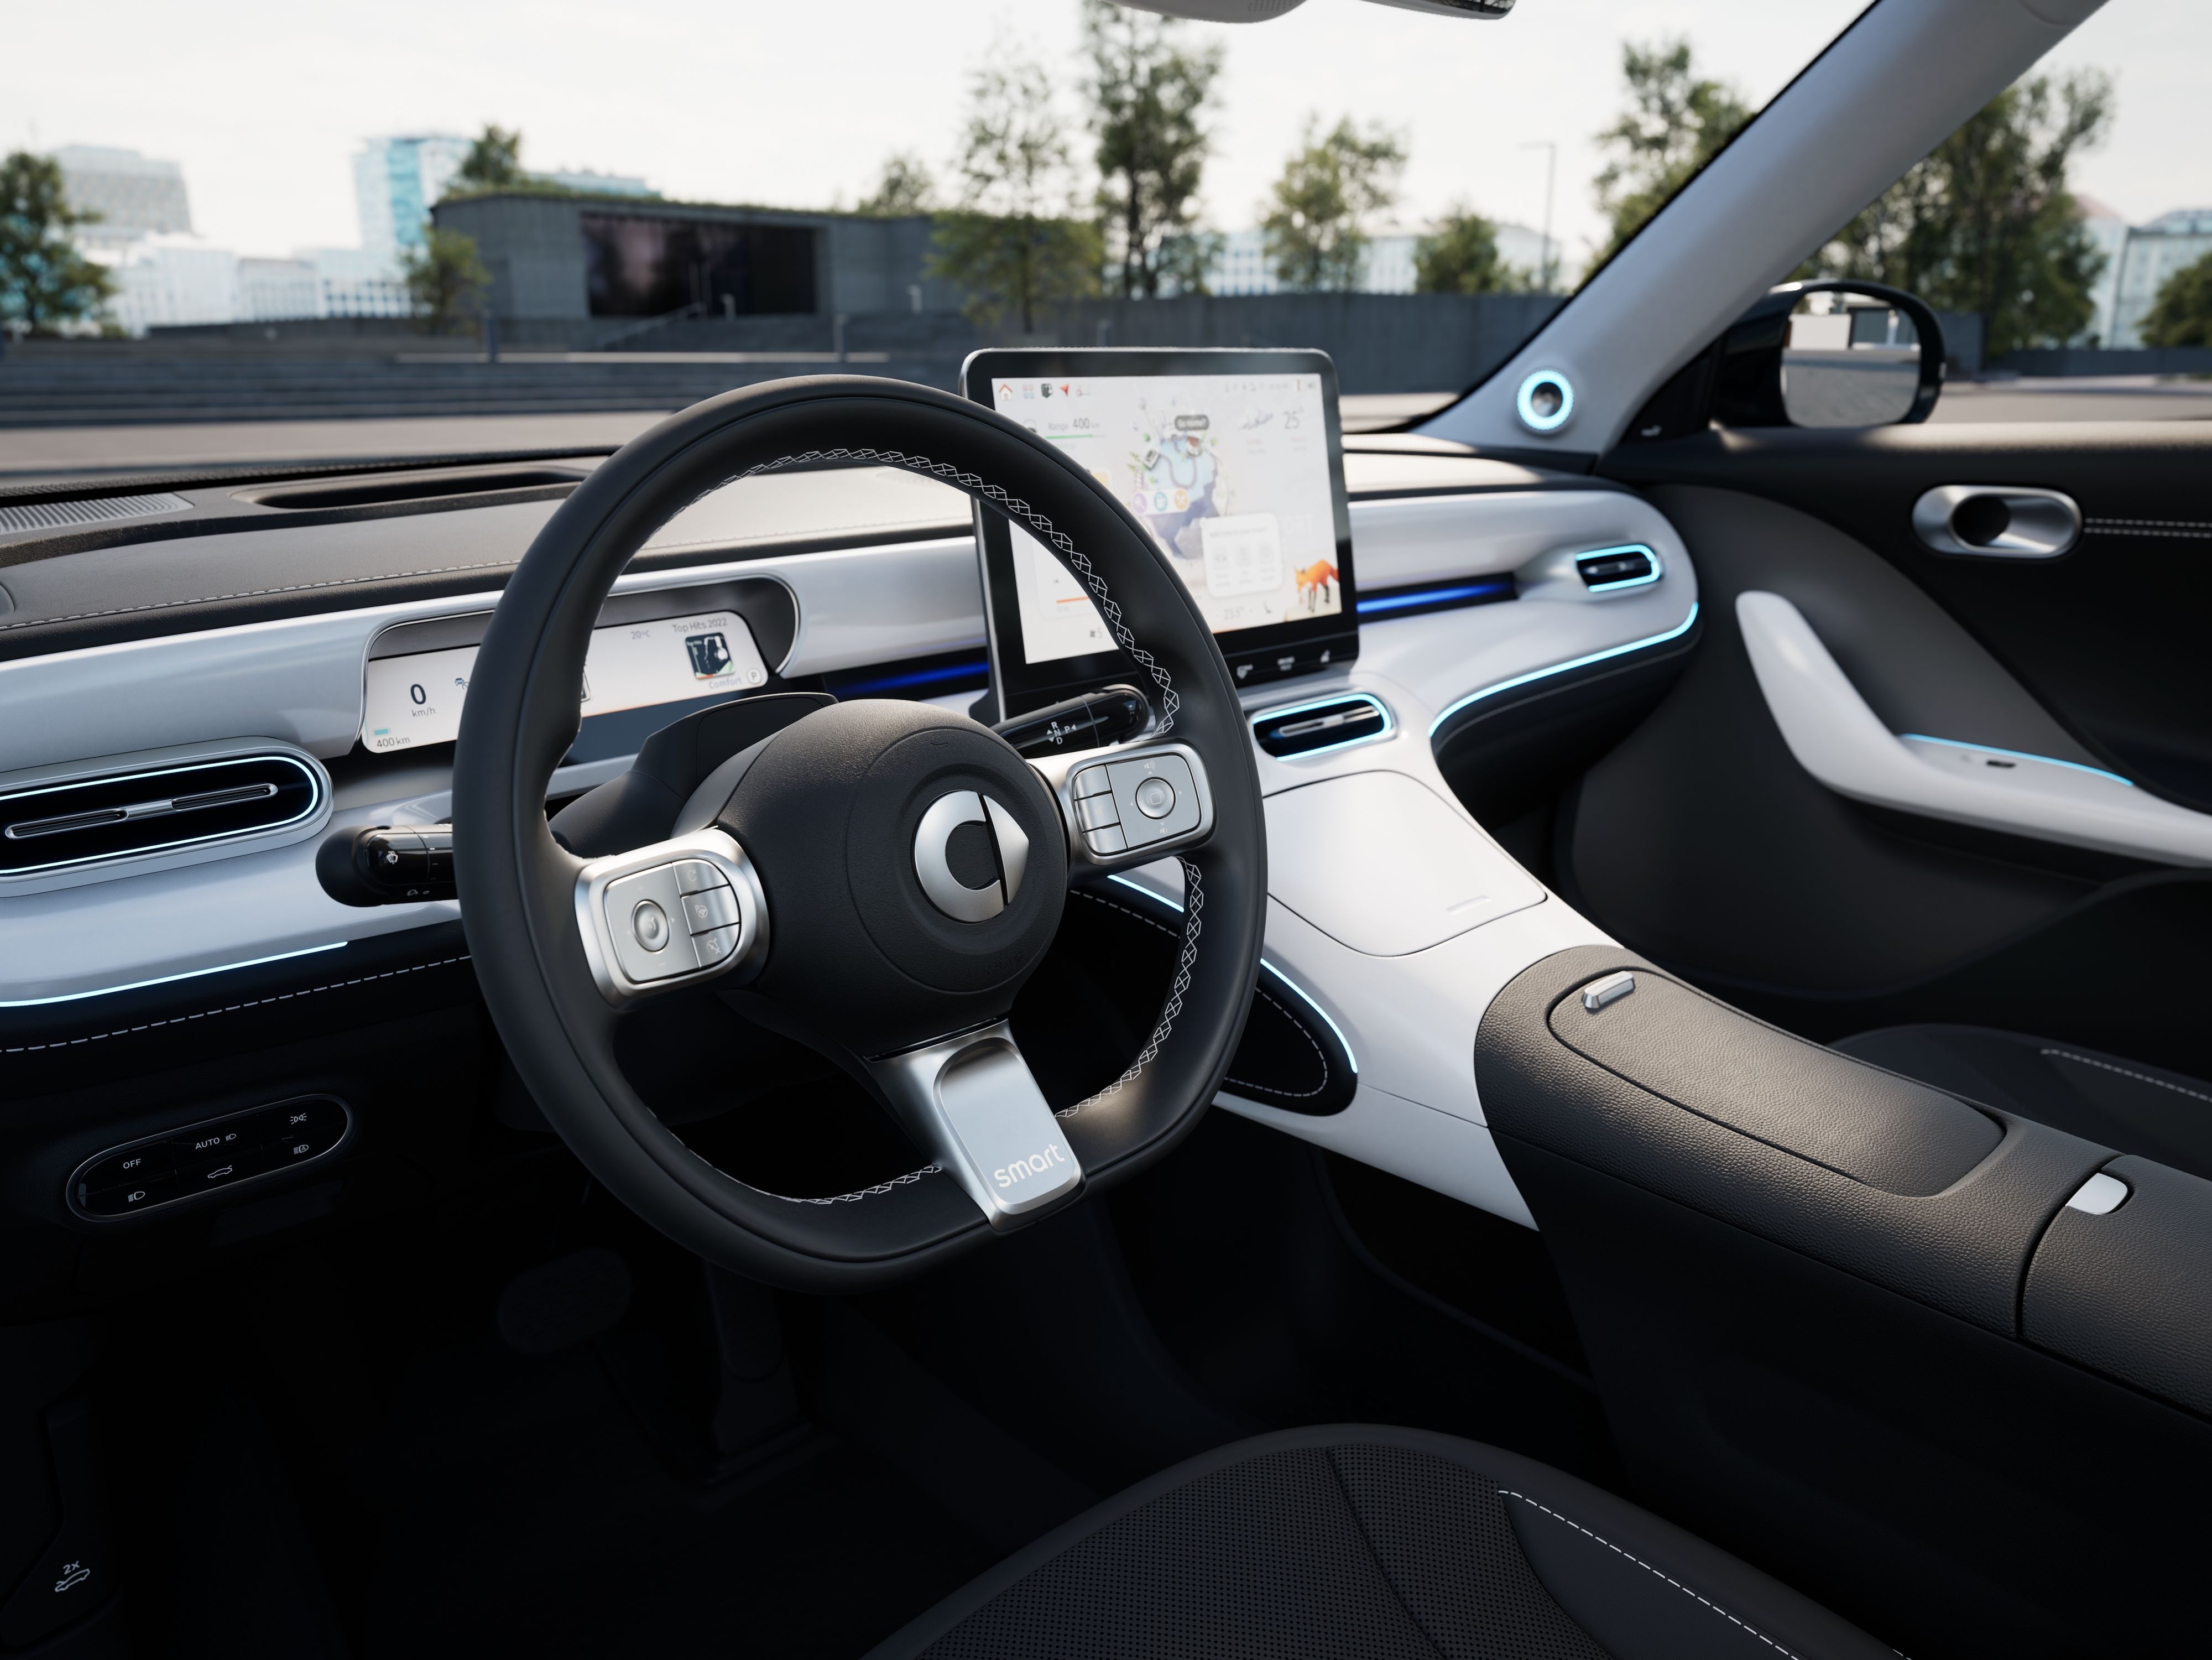 2023 BMW Smart Car Release Date